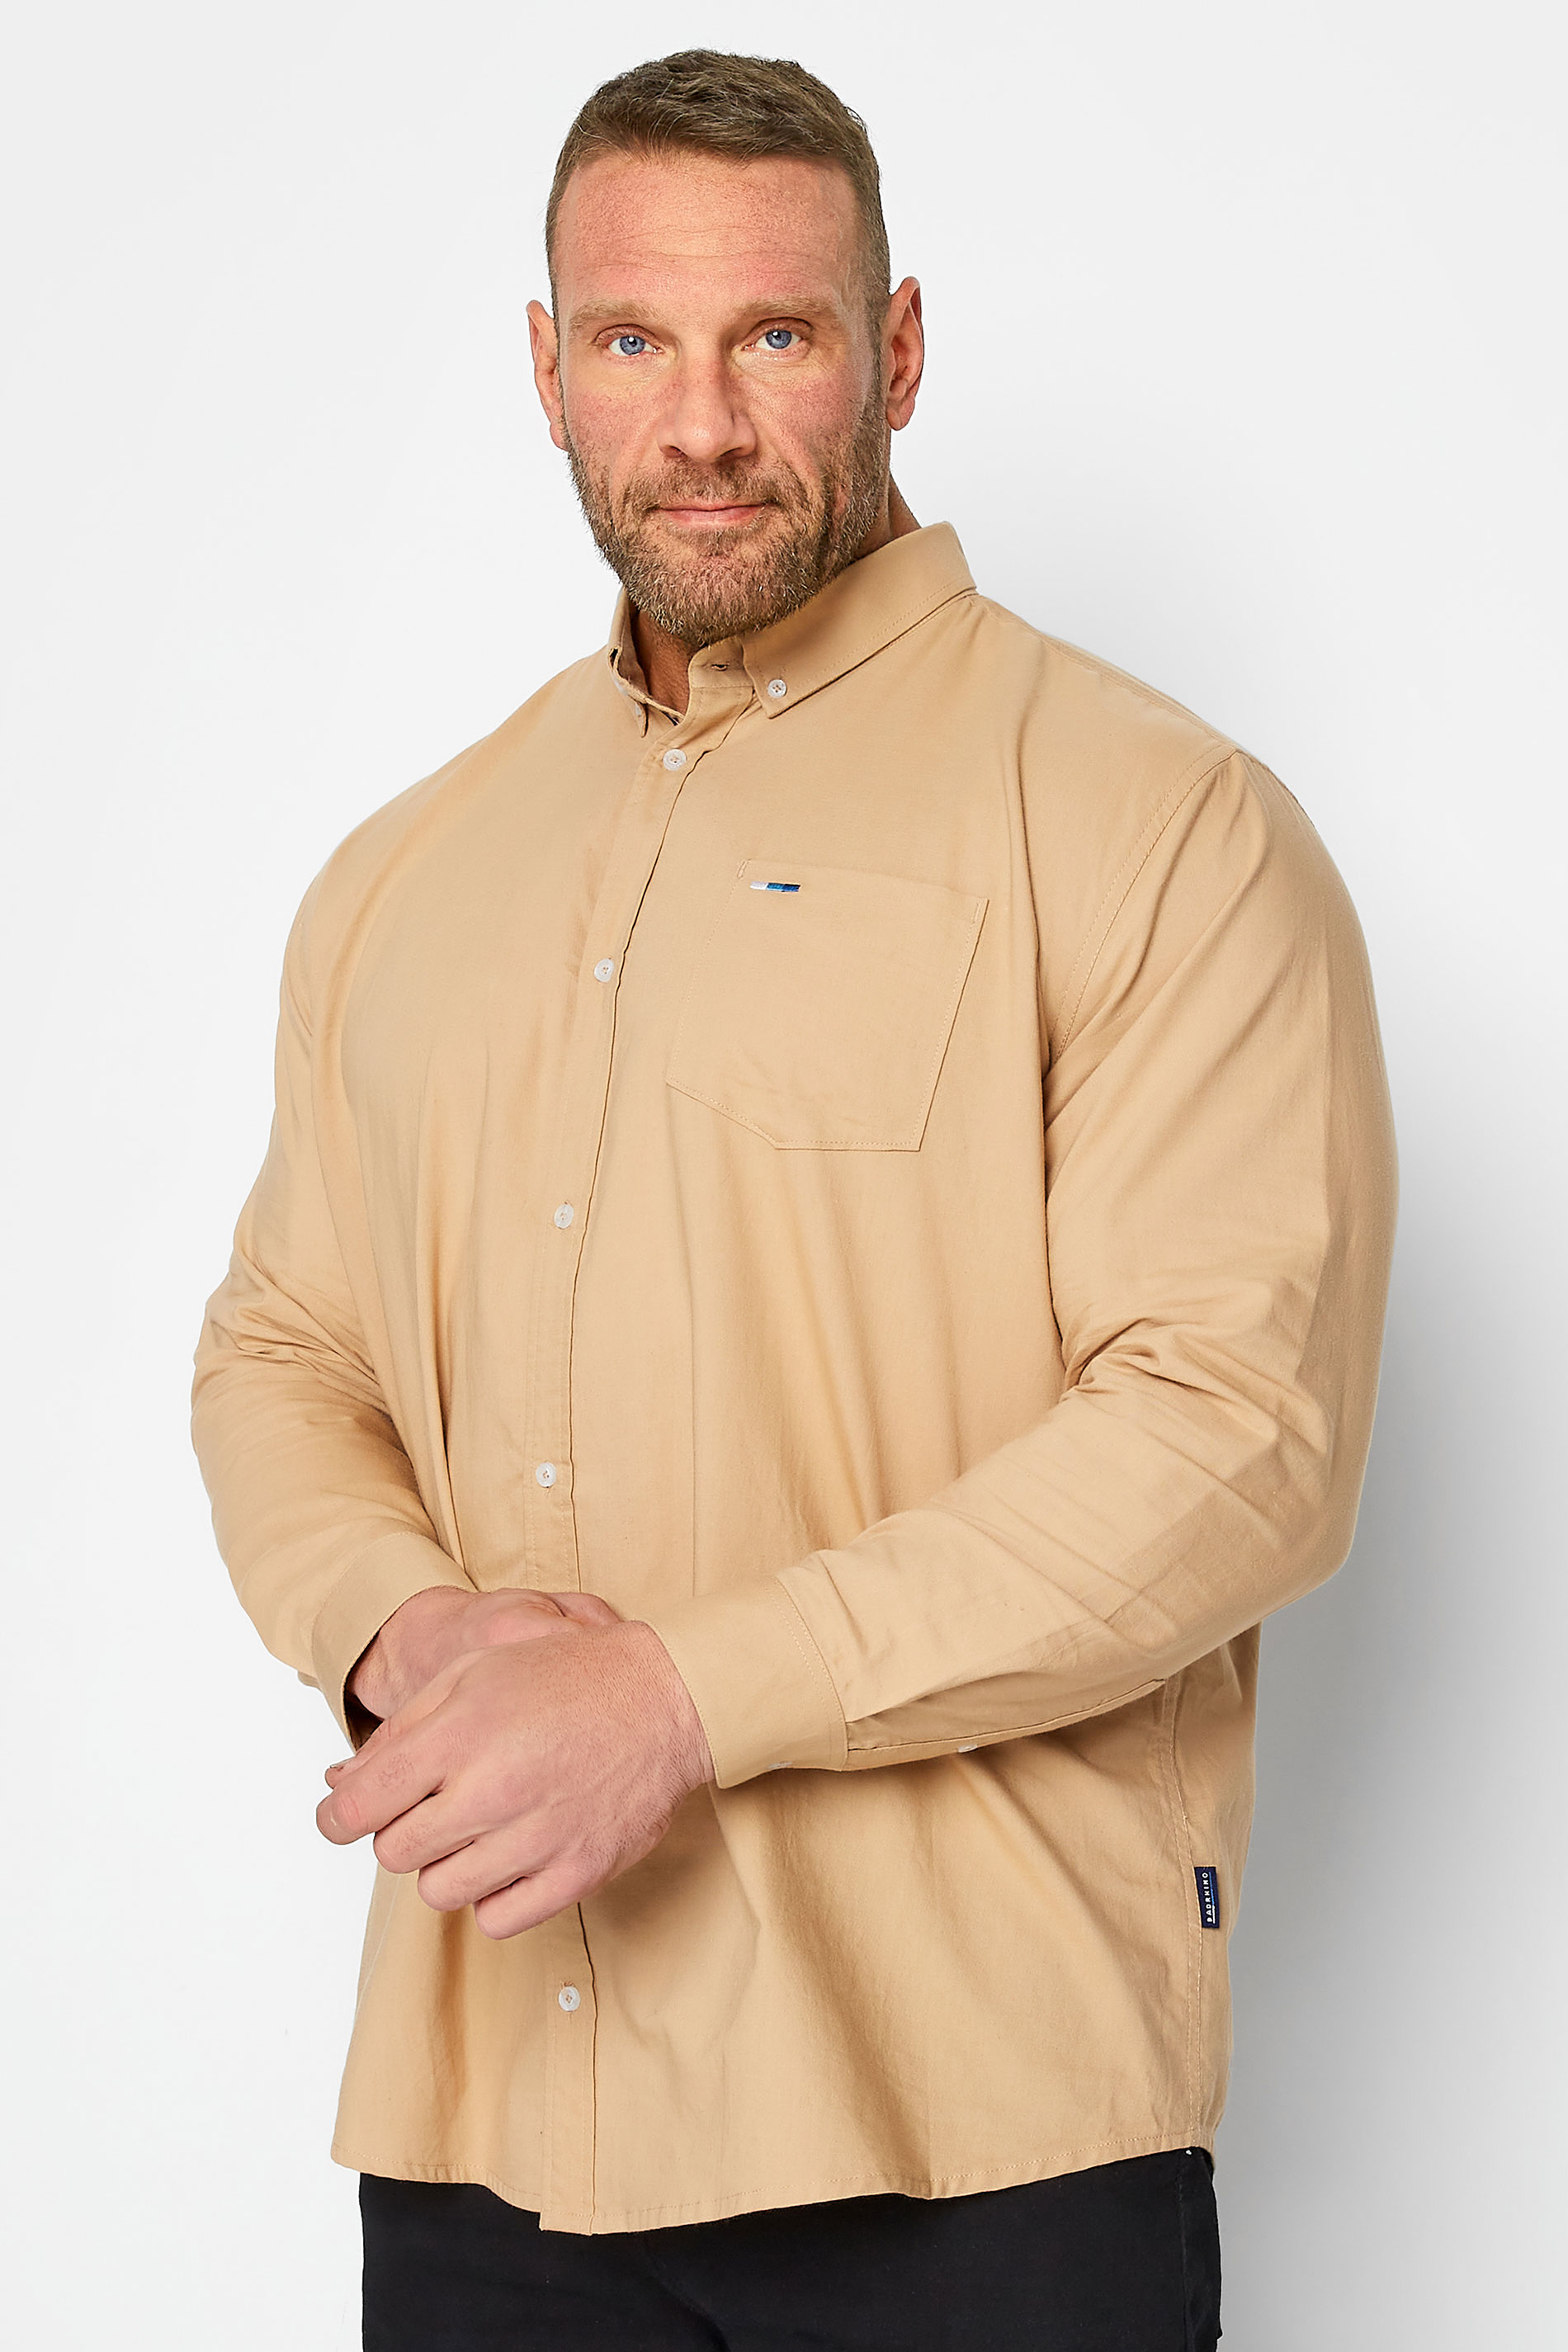 BadRhino Big & Tall Beige Brown Long Sleeve Oxford Shirt | BadRhino 1